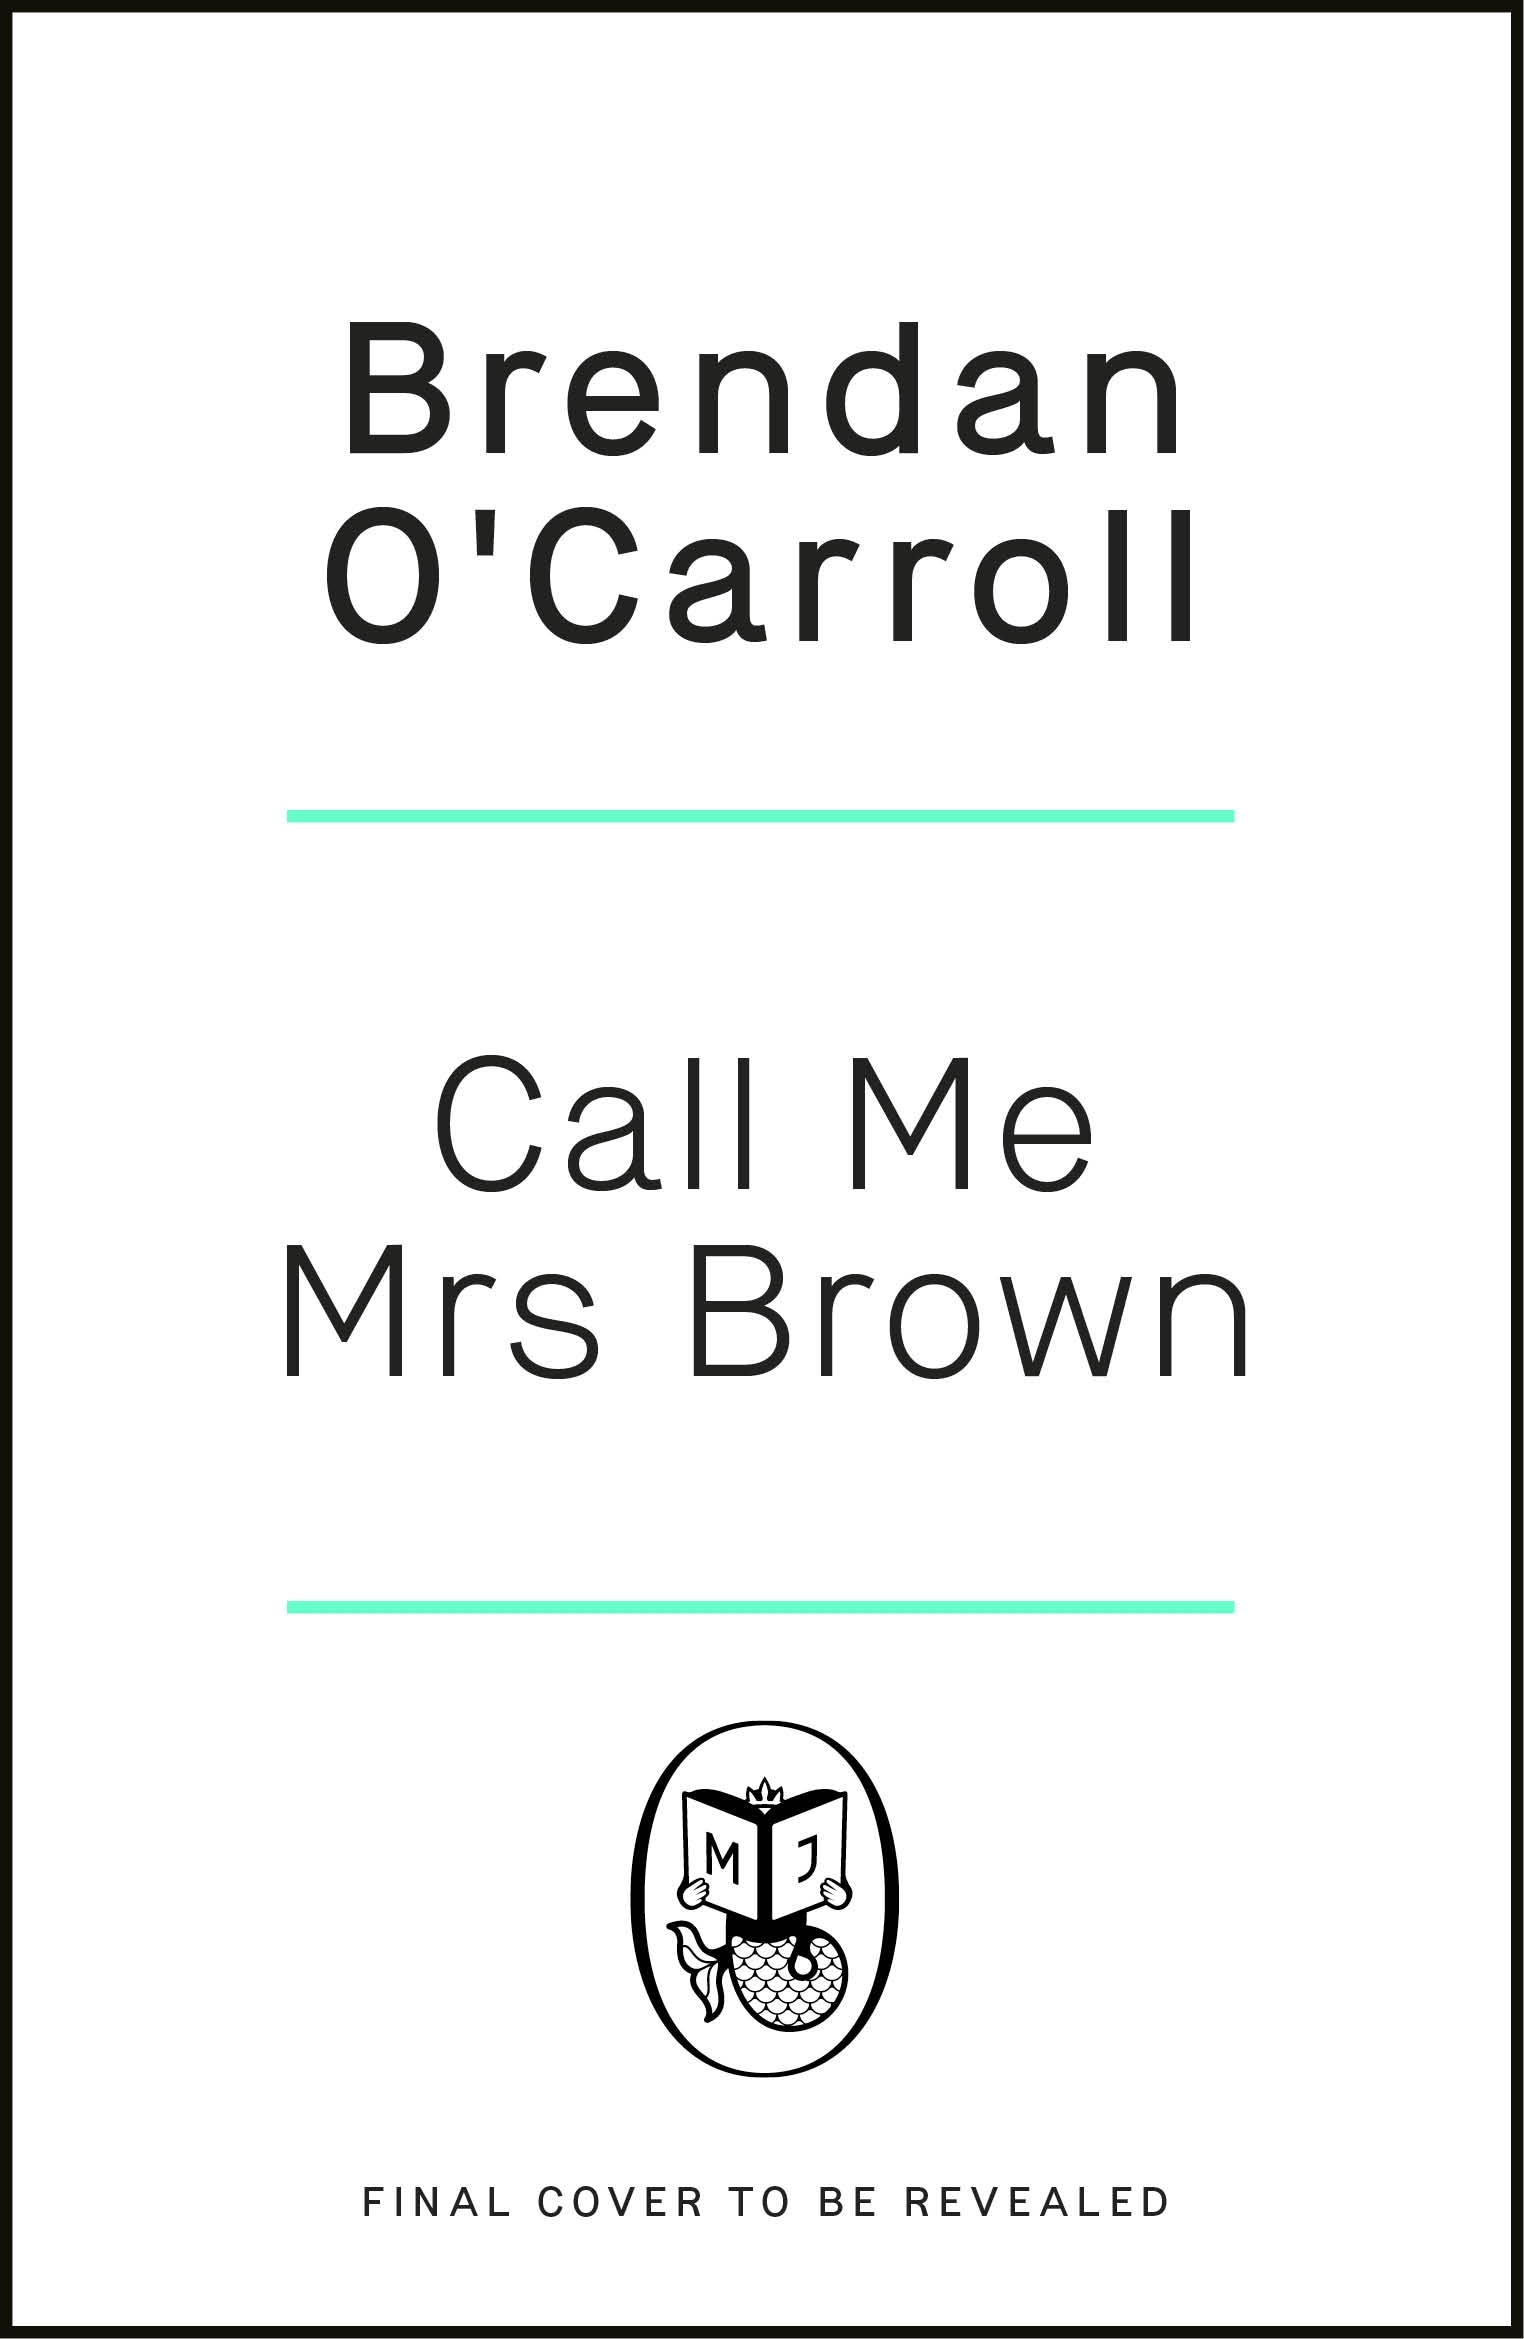 Book “Call Me Mrs Brown” by Brendan O'Carroll — October 13, 2022